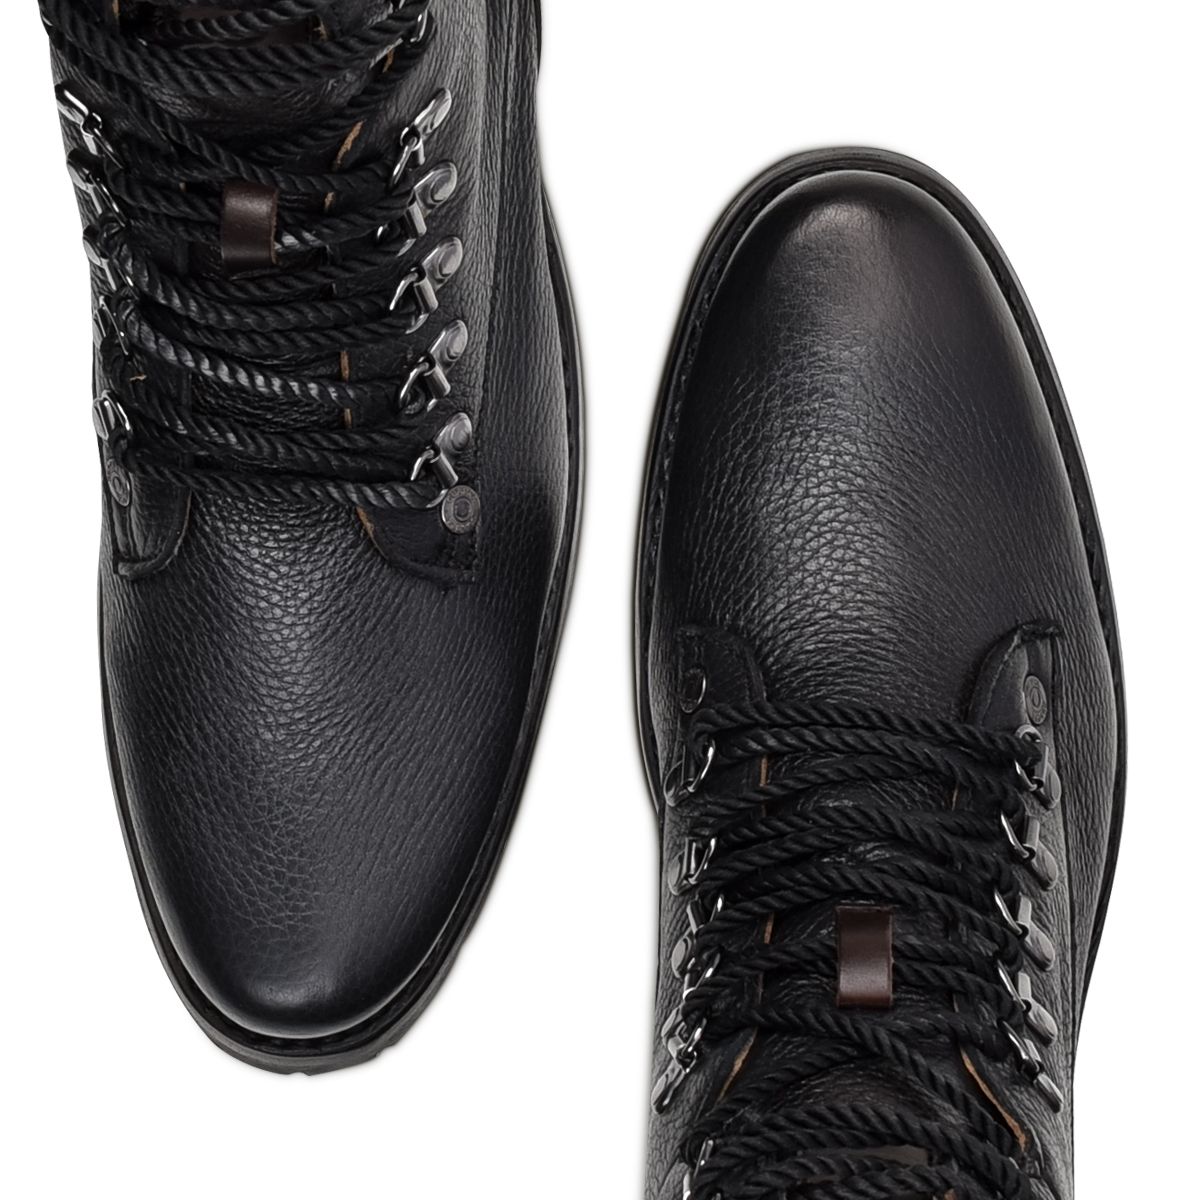 4D10VE - Cuadra black casual vintage fashion deerskin ankle booties for men-Kuet.us